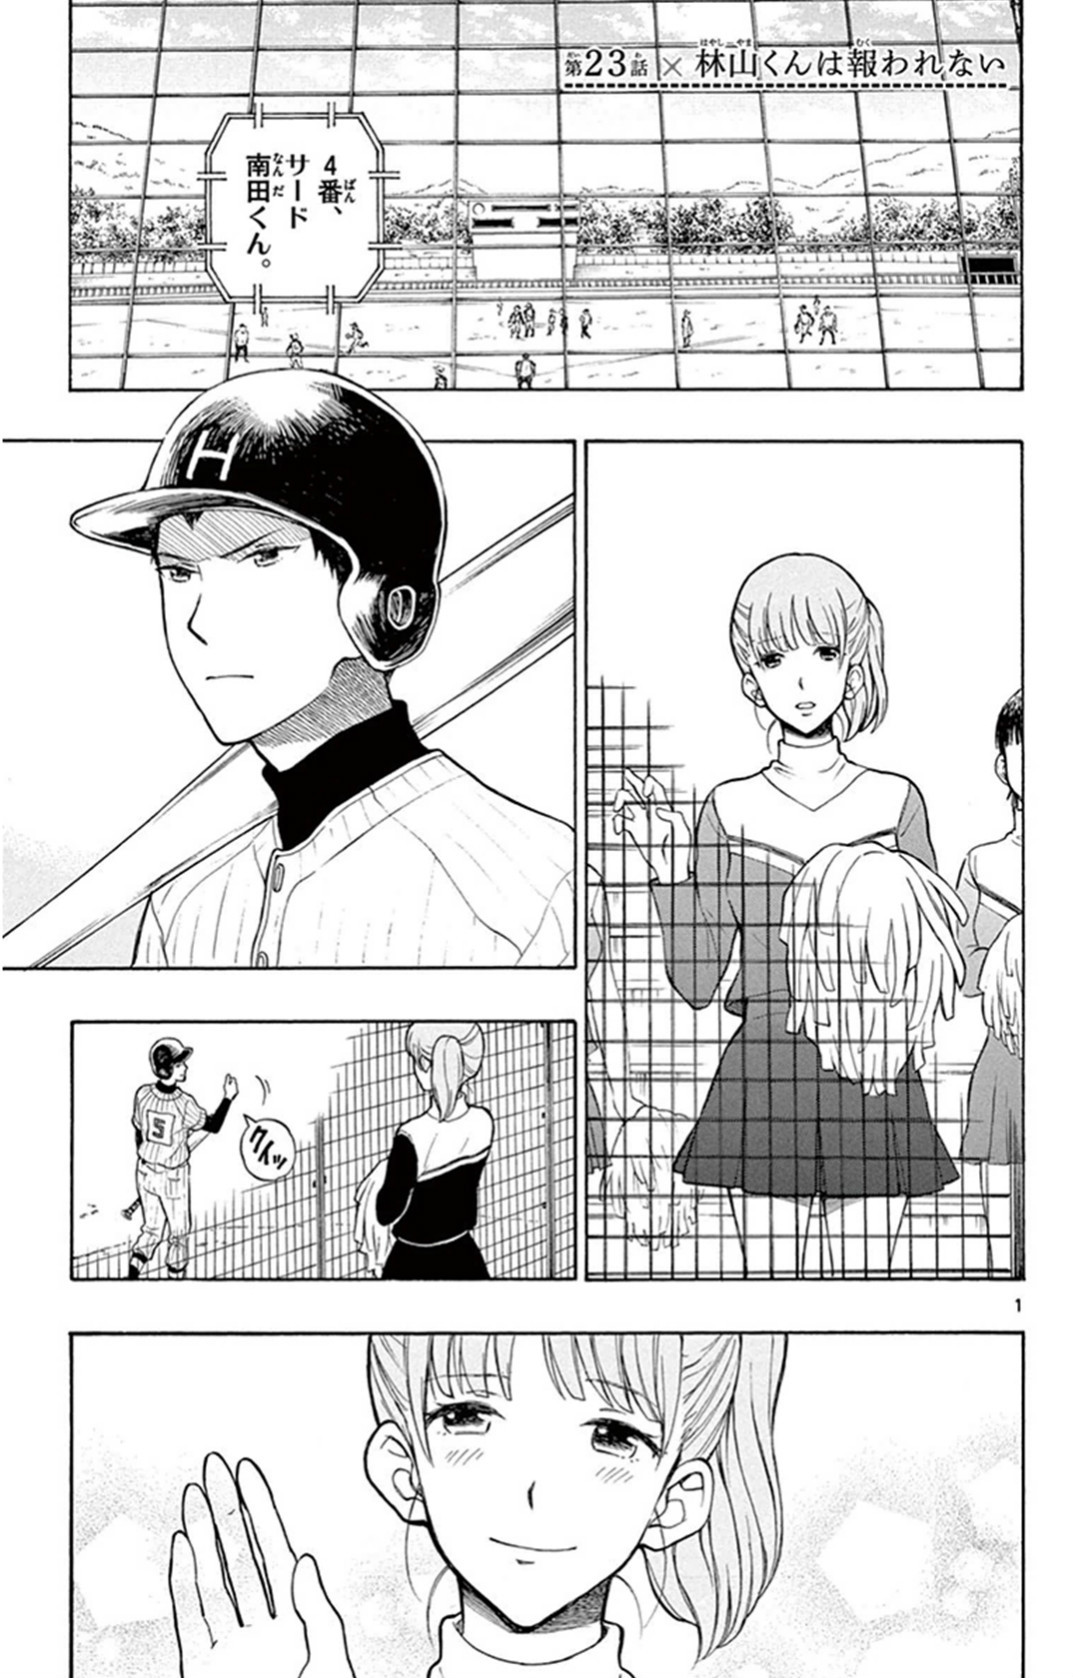 Yugami-kun ni wa Tomodachi ga Inai - Chapter 023 - Page 1